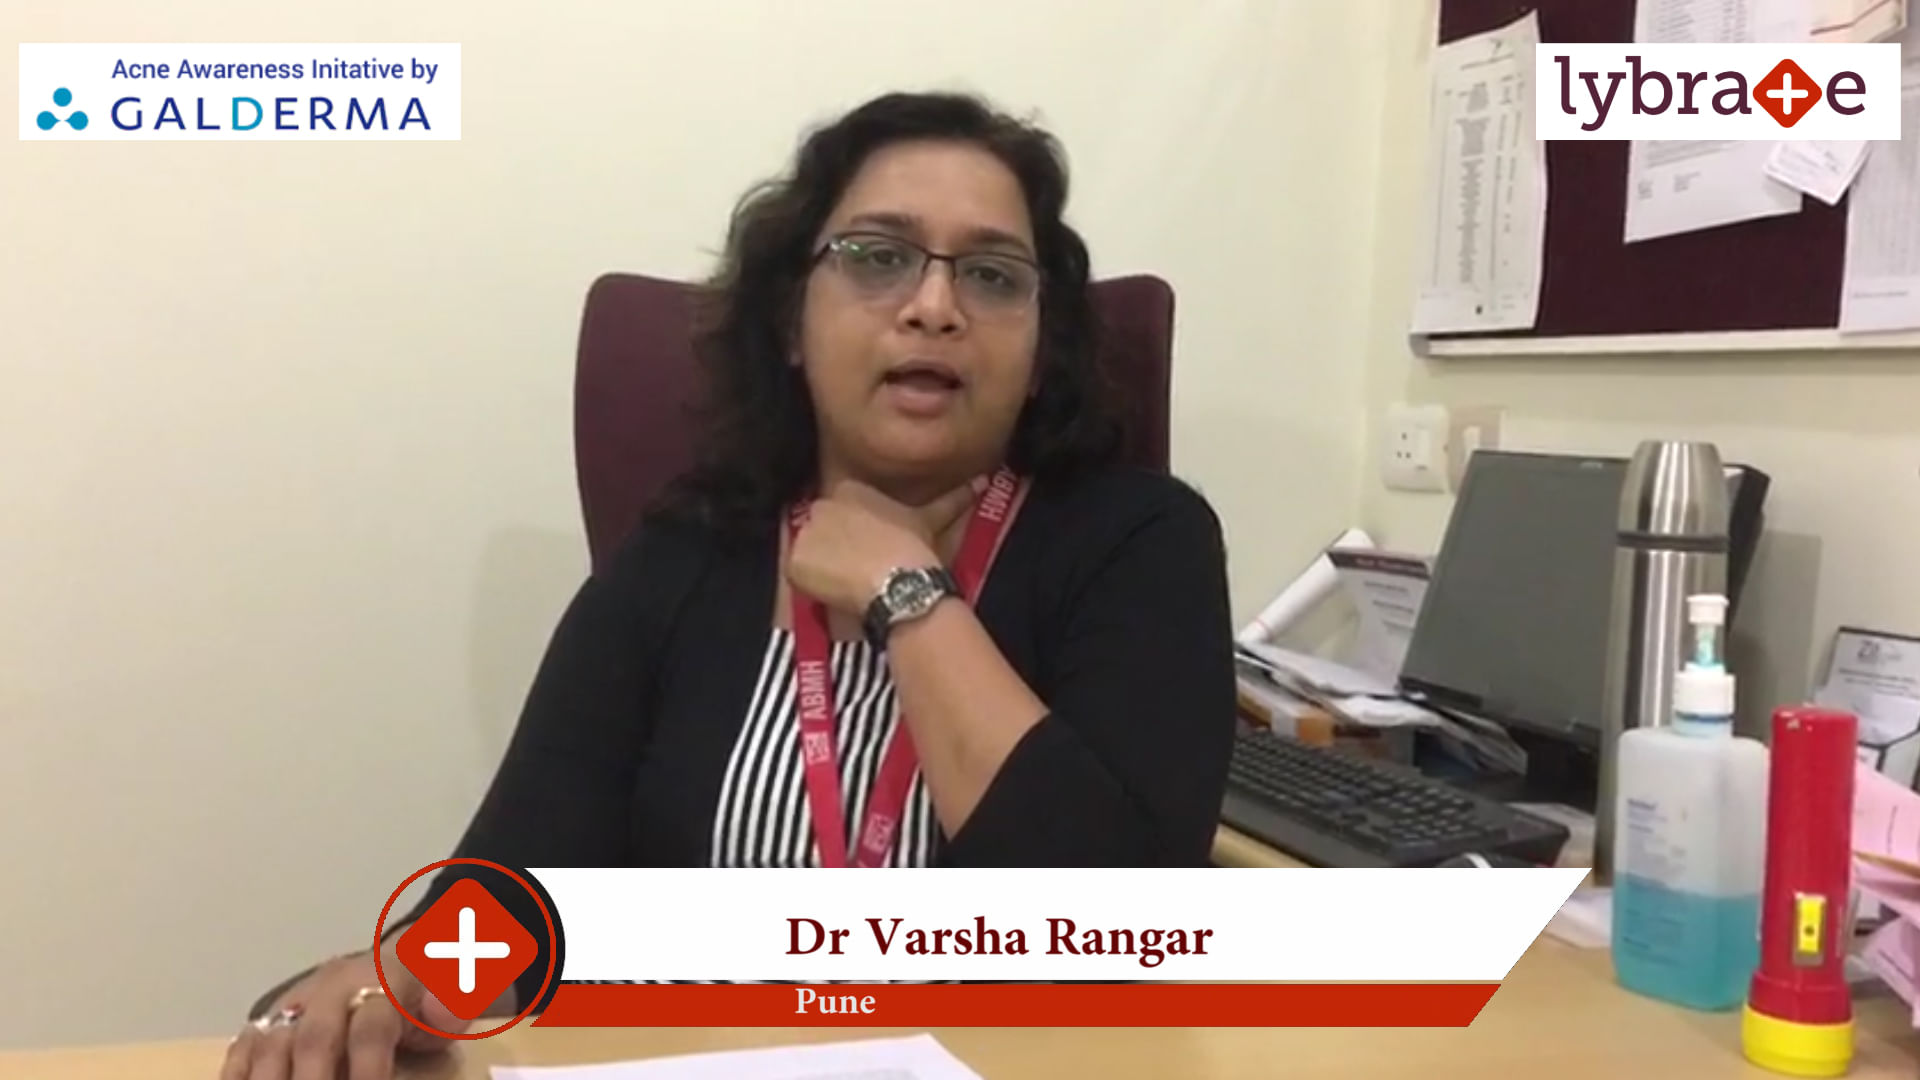 Lybrate | Dr. Varsha Rangar speaks on IMPORTANCE OF TREATING ACNE EARLY